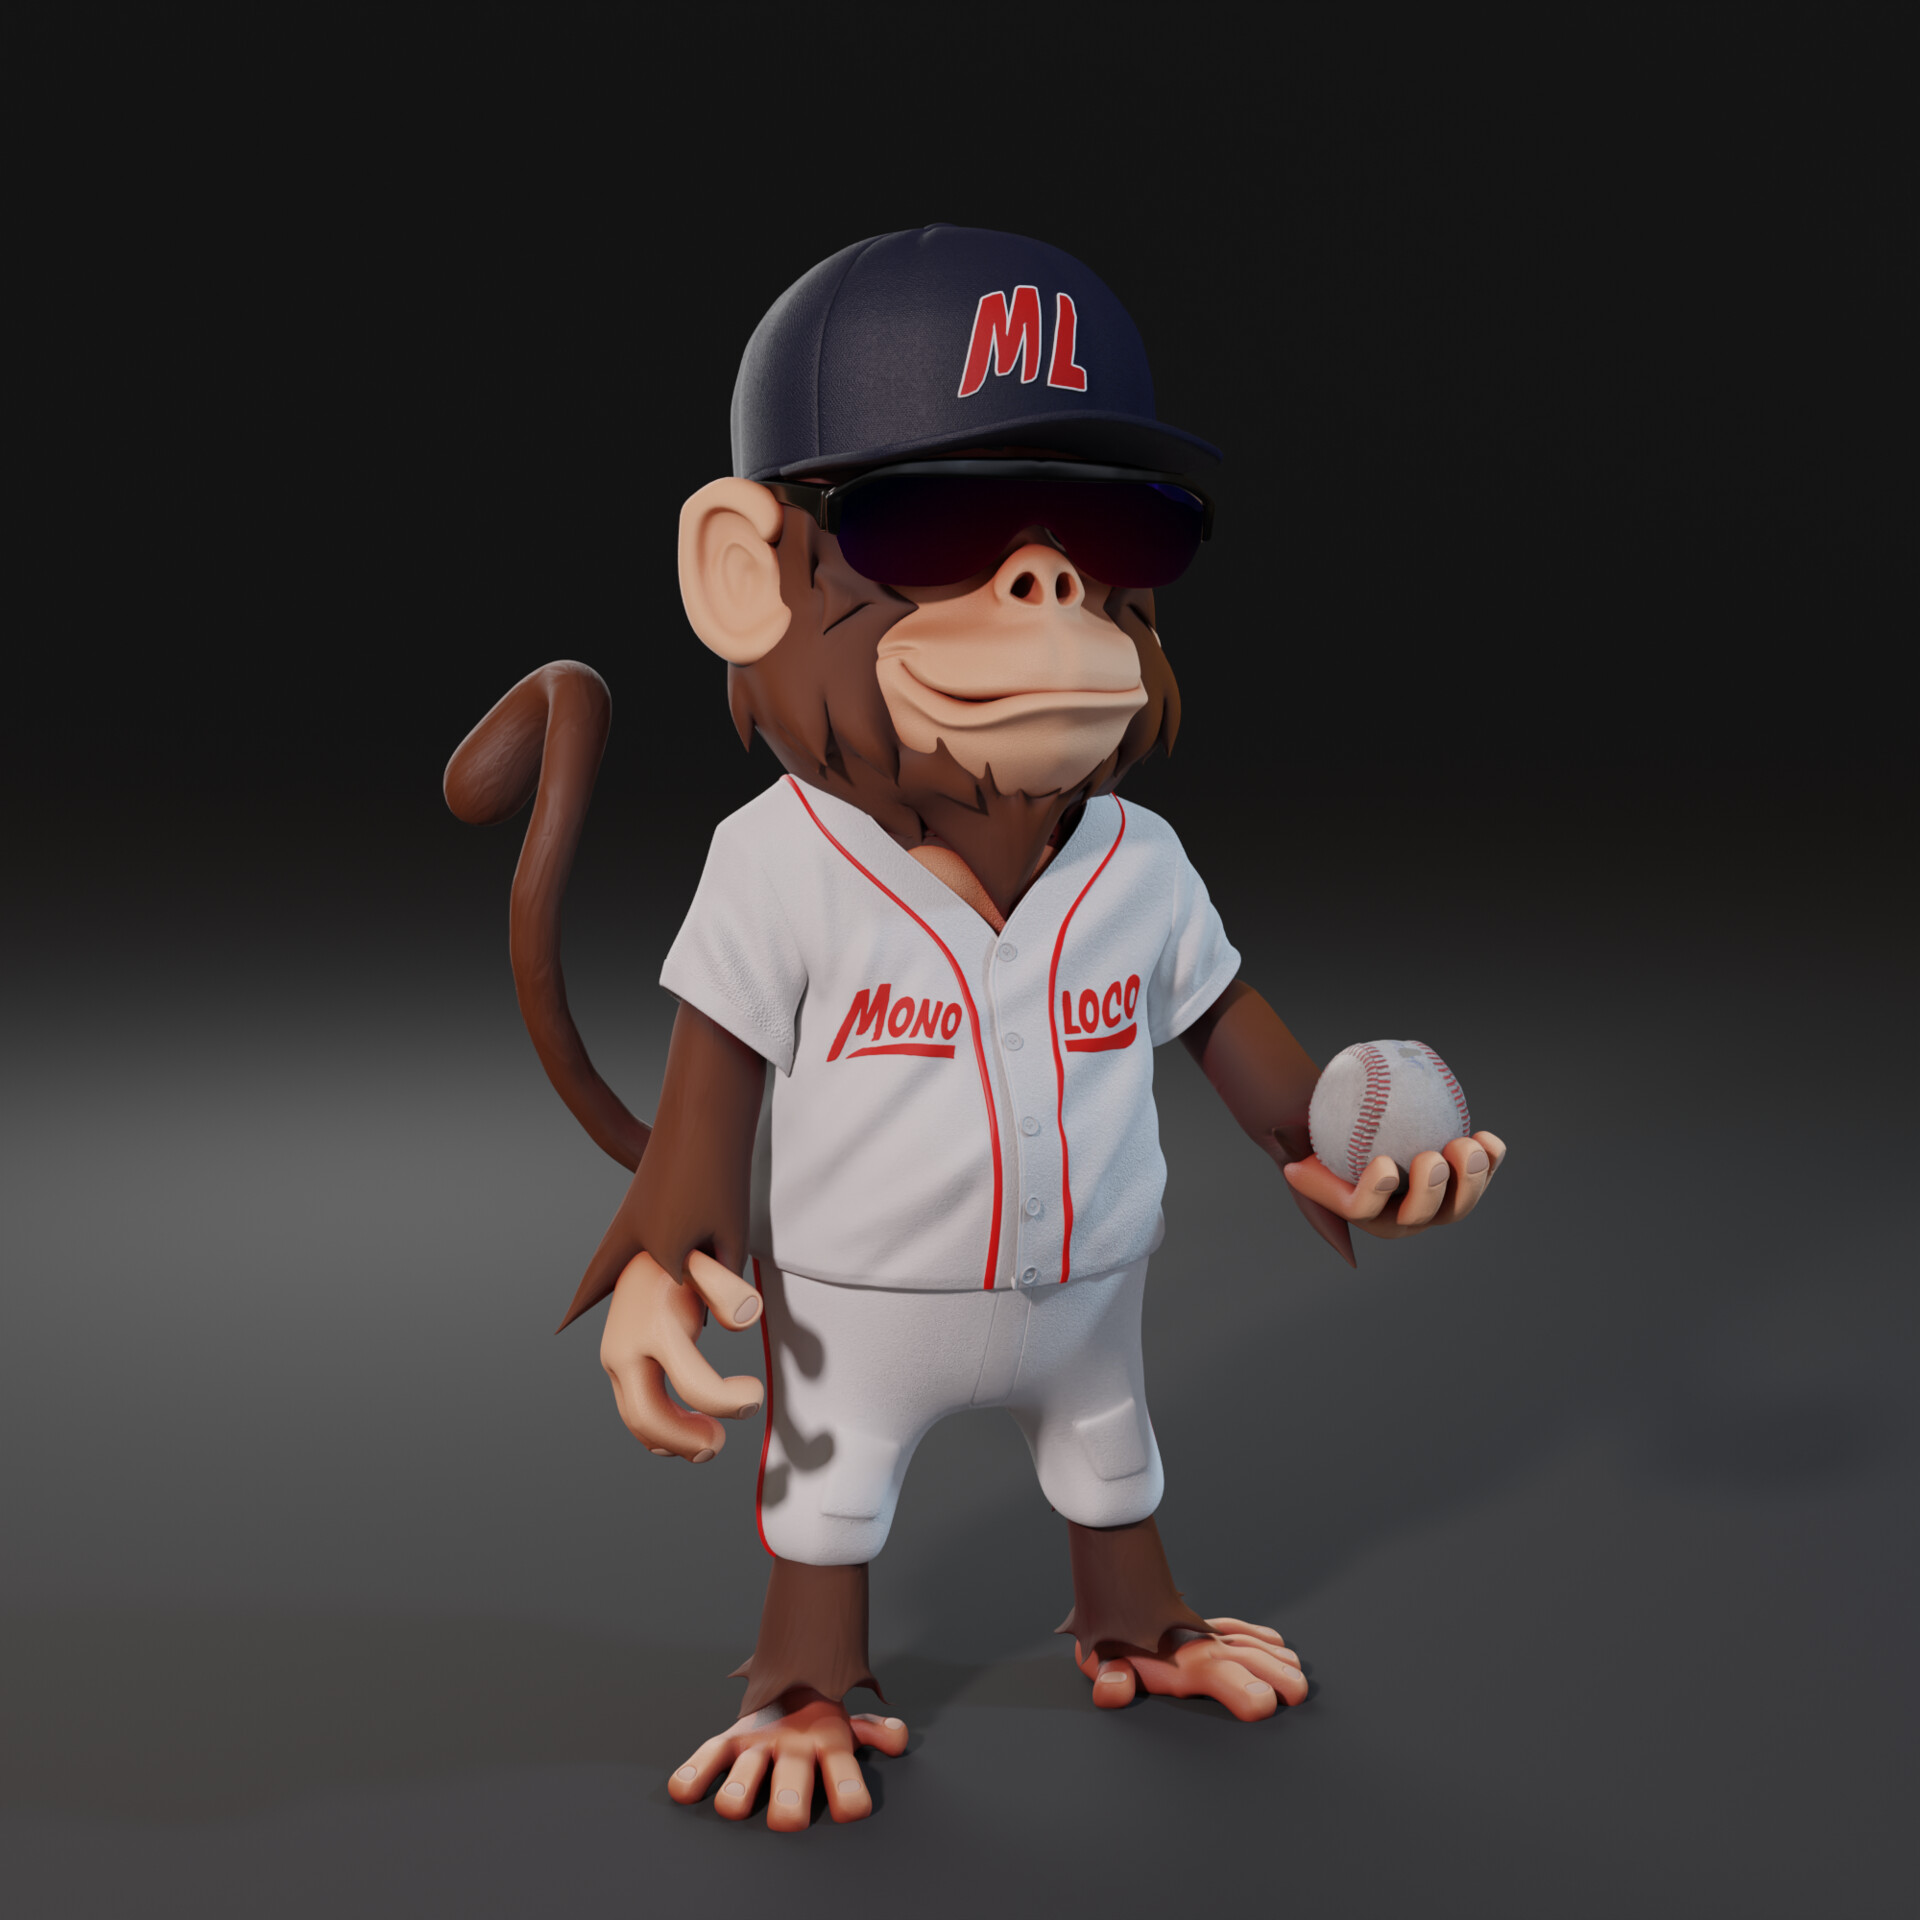 ArtStation - 3d character crazy monkey